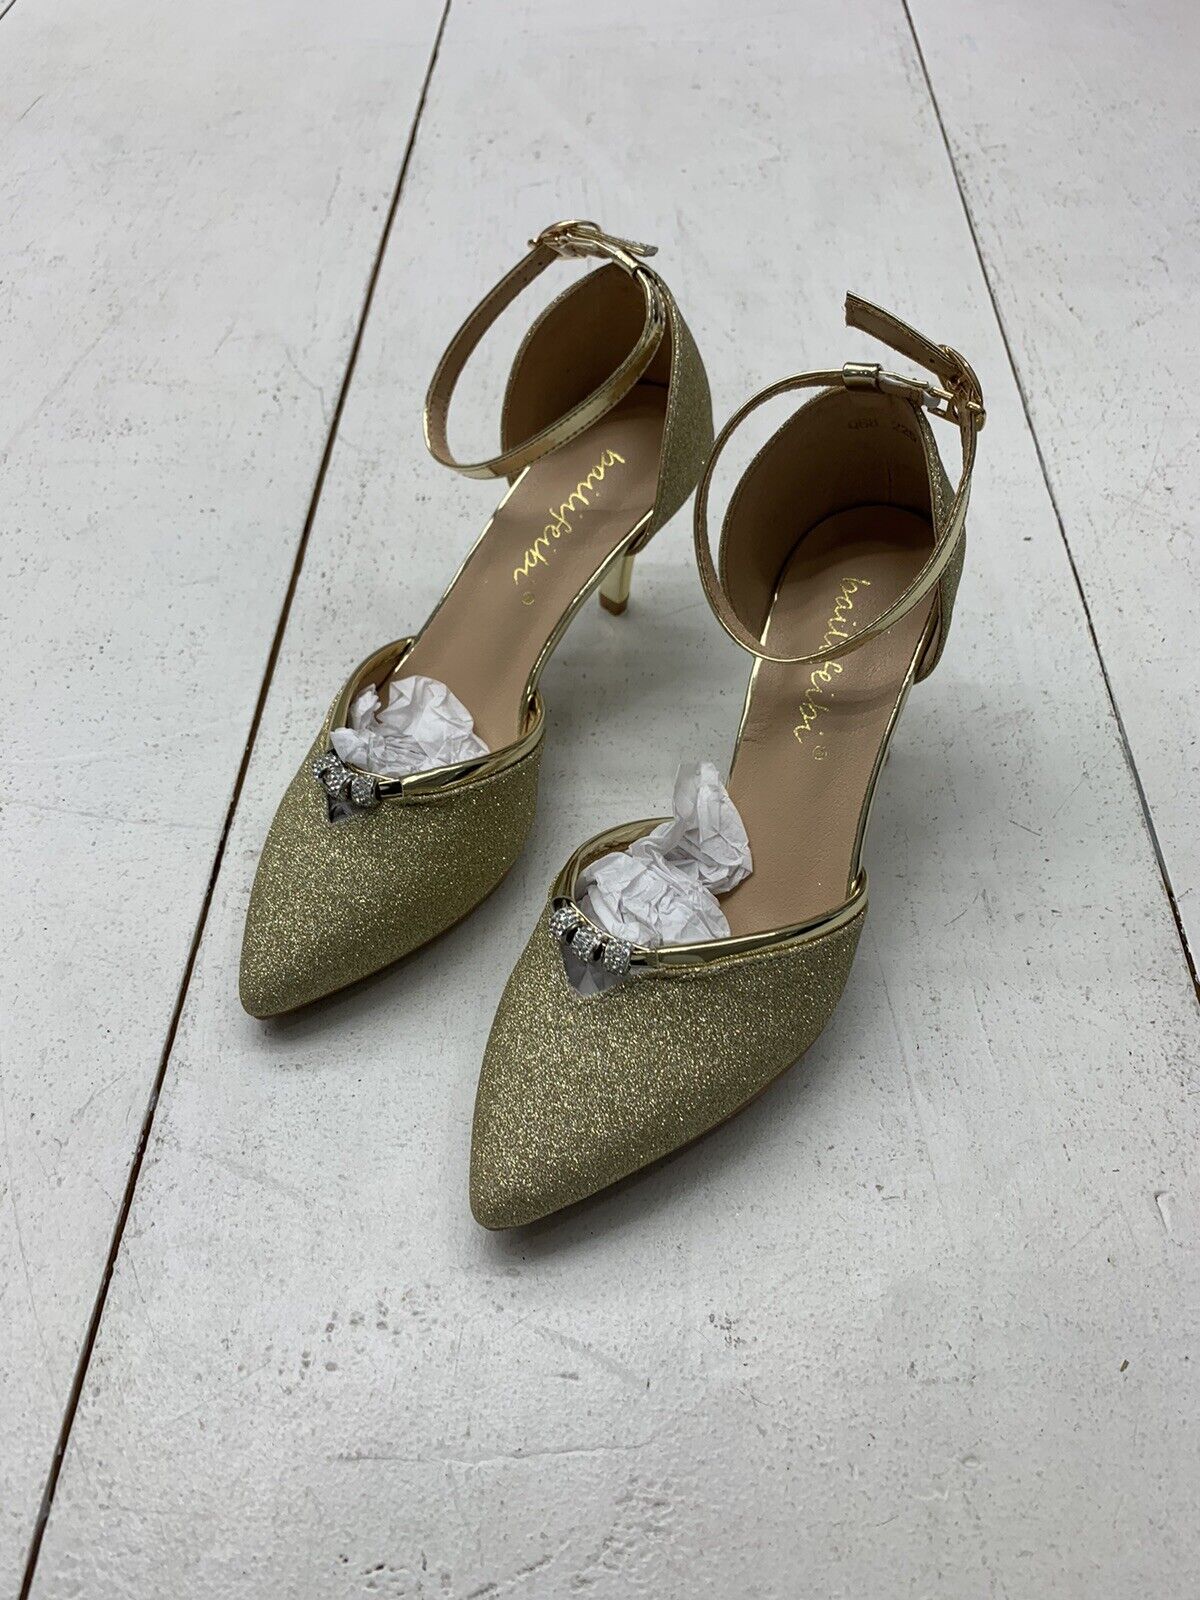 Dream Pairs Women's Party Dress Shoes Ankle Strap Wedding High Chunky  Platform Heel Sandals HI-LO GOLD/GLITTER Size 5 - Walmart.com